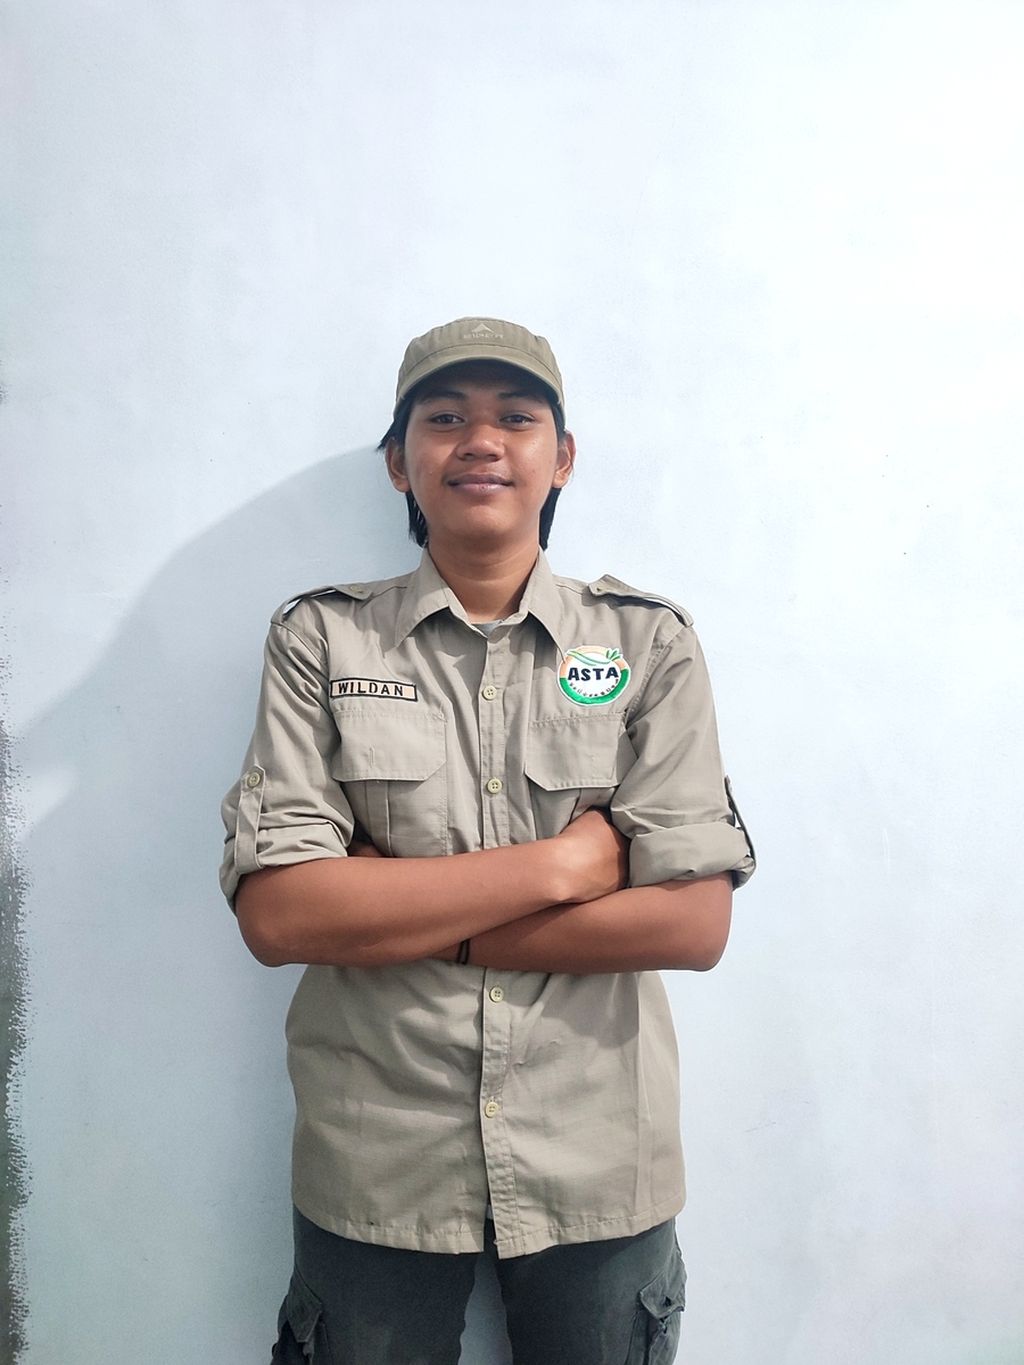 Wildan Syah adalah anggota Aspera Madyasta (Asta) Indonesia Foundation yang bergerak dalam bidang konservasi alam. Ia merupakan pelajar SMK Negeri 52 Jakarta yang mengambil jurusan desain interior dan teknik furnitur.